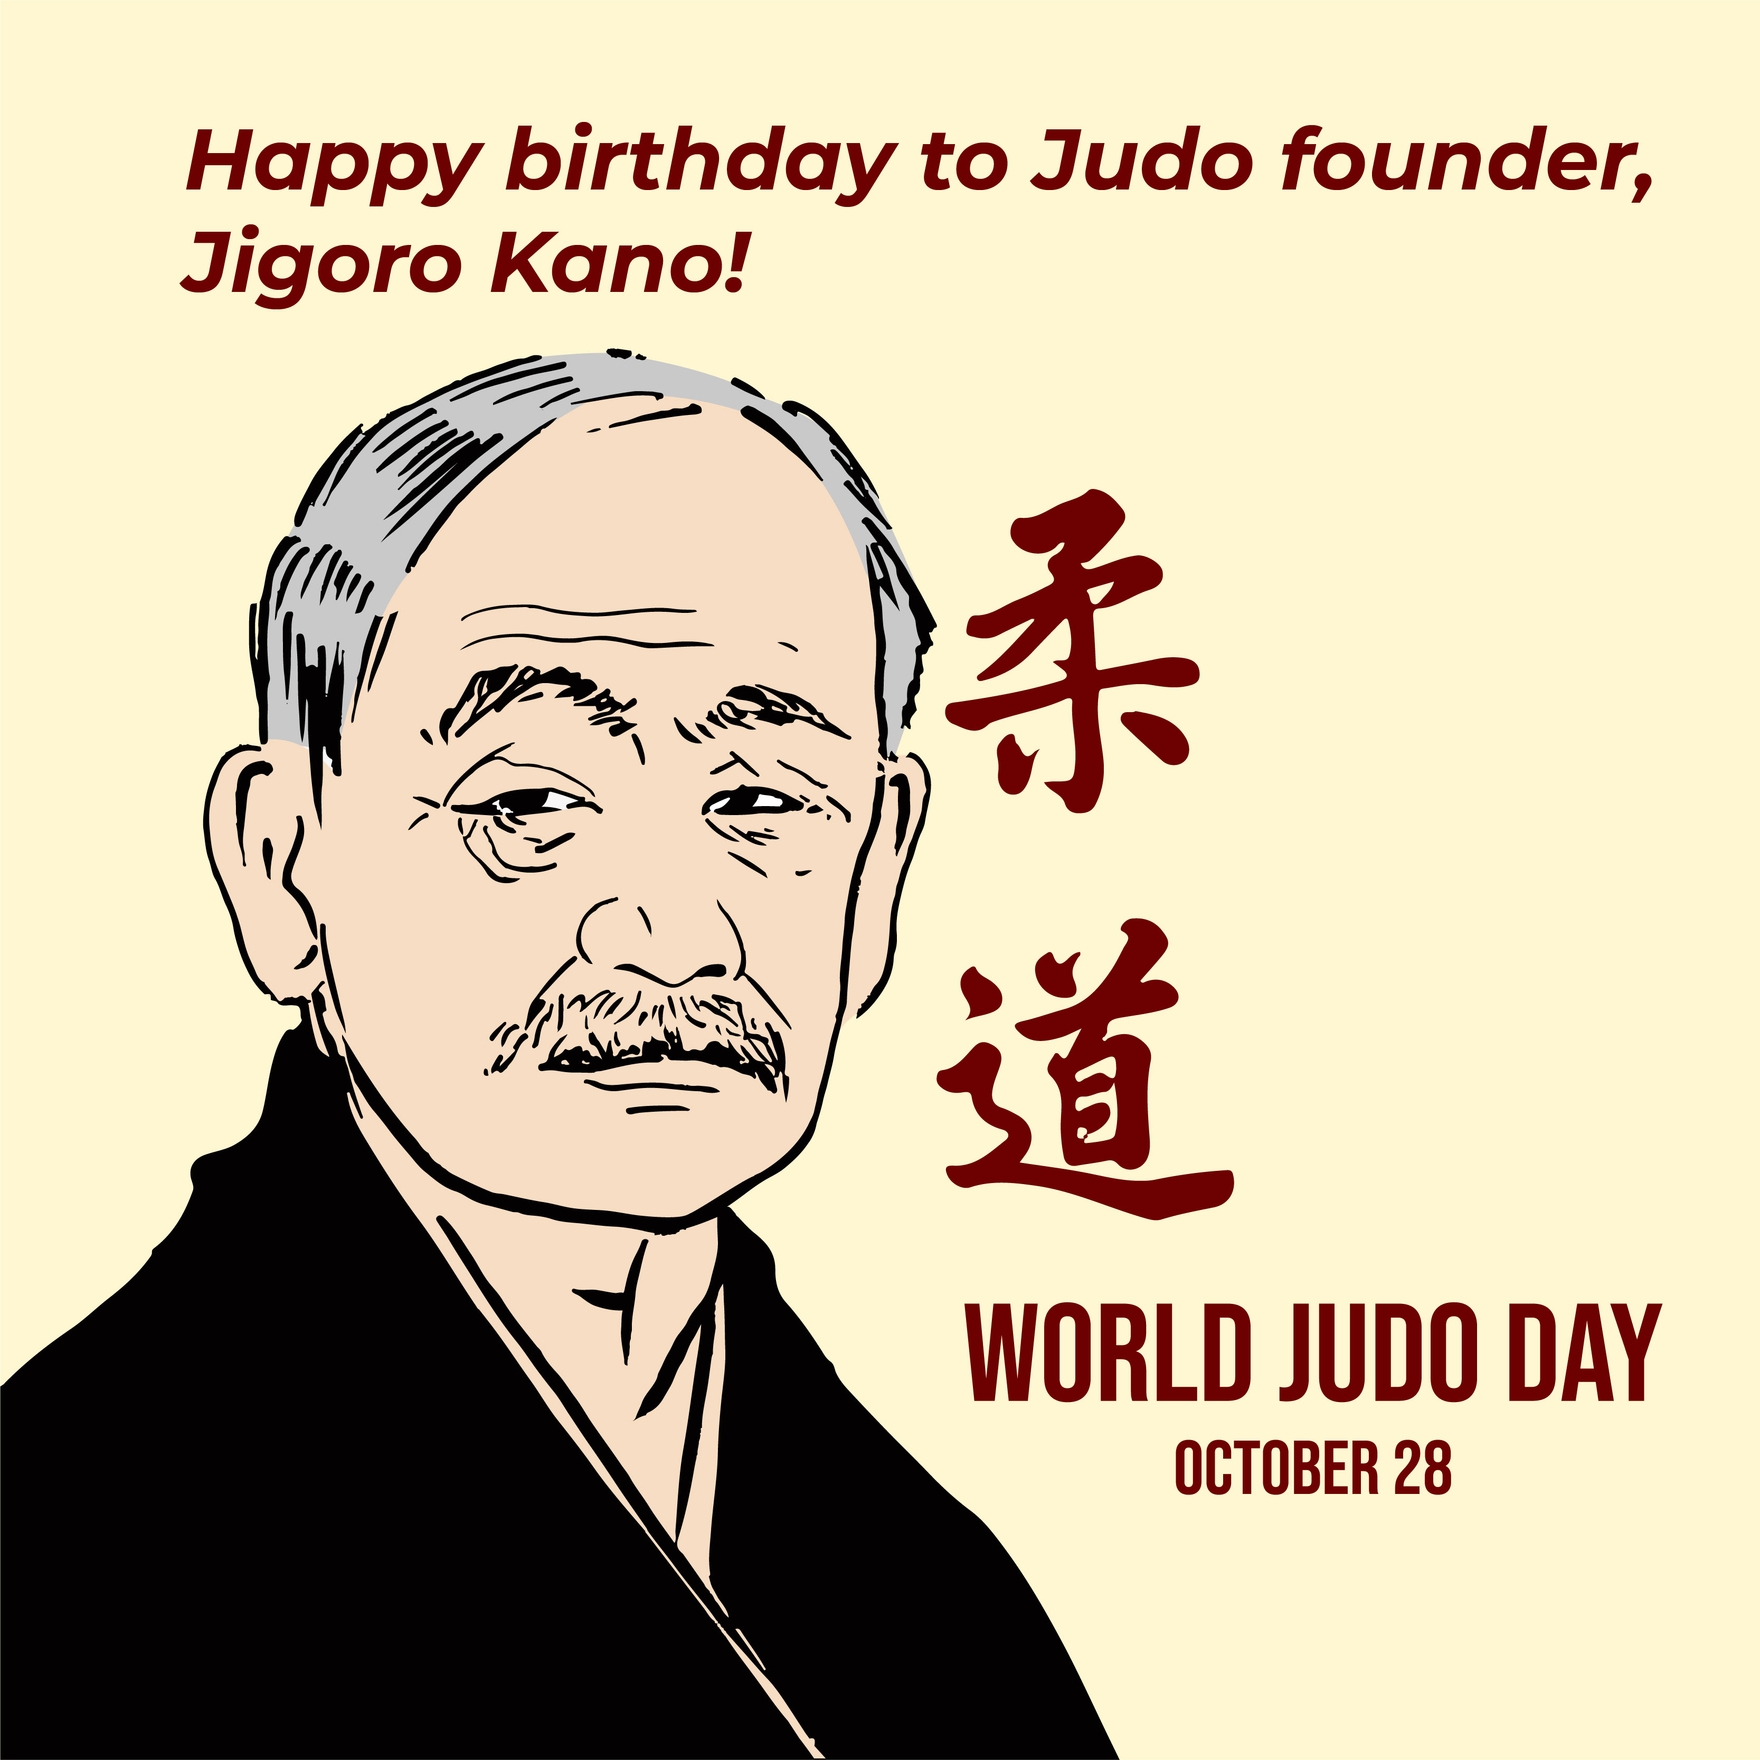 Free World Judo Day Whatsapp Post in Illustrator, PSD, EPS, SVG, JPG, PNG